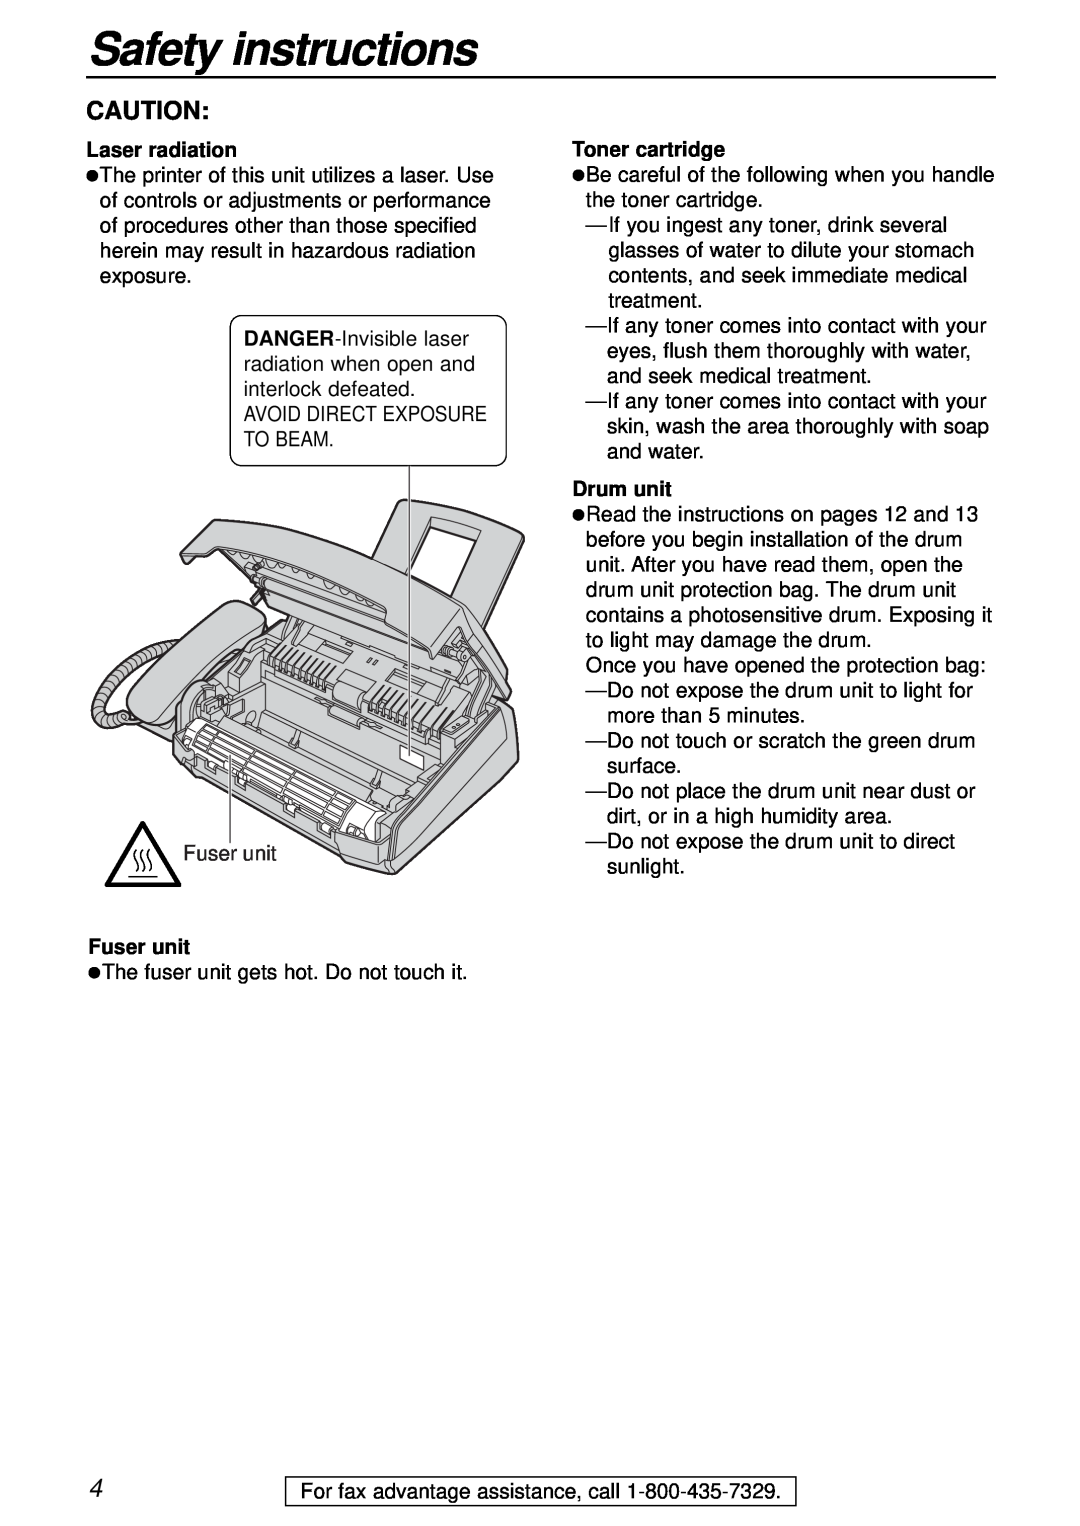 Panasonic KX-FL501 manual Safety instructions, Laser radiation, Fuser unit, Toner cartridge, Drum unit 